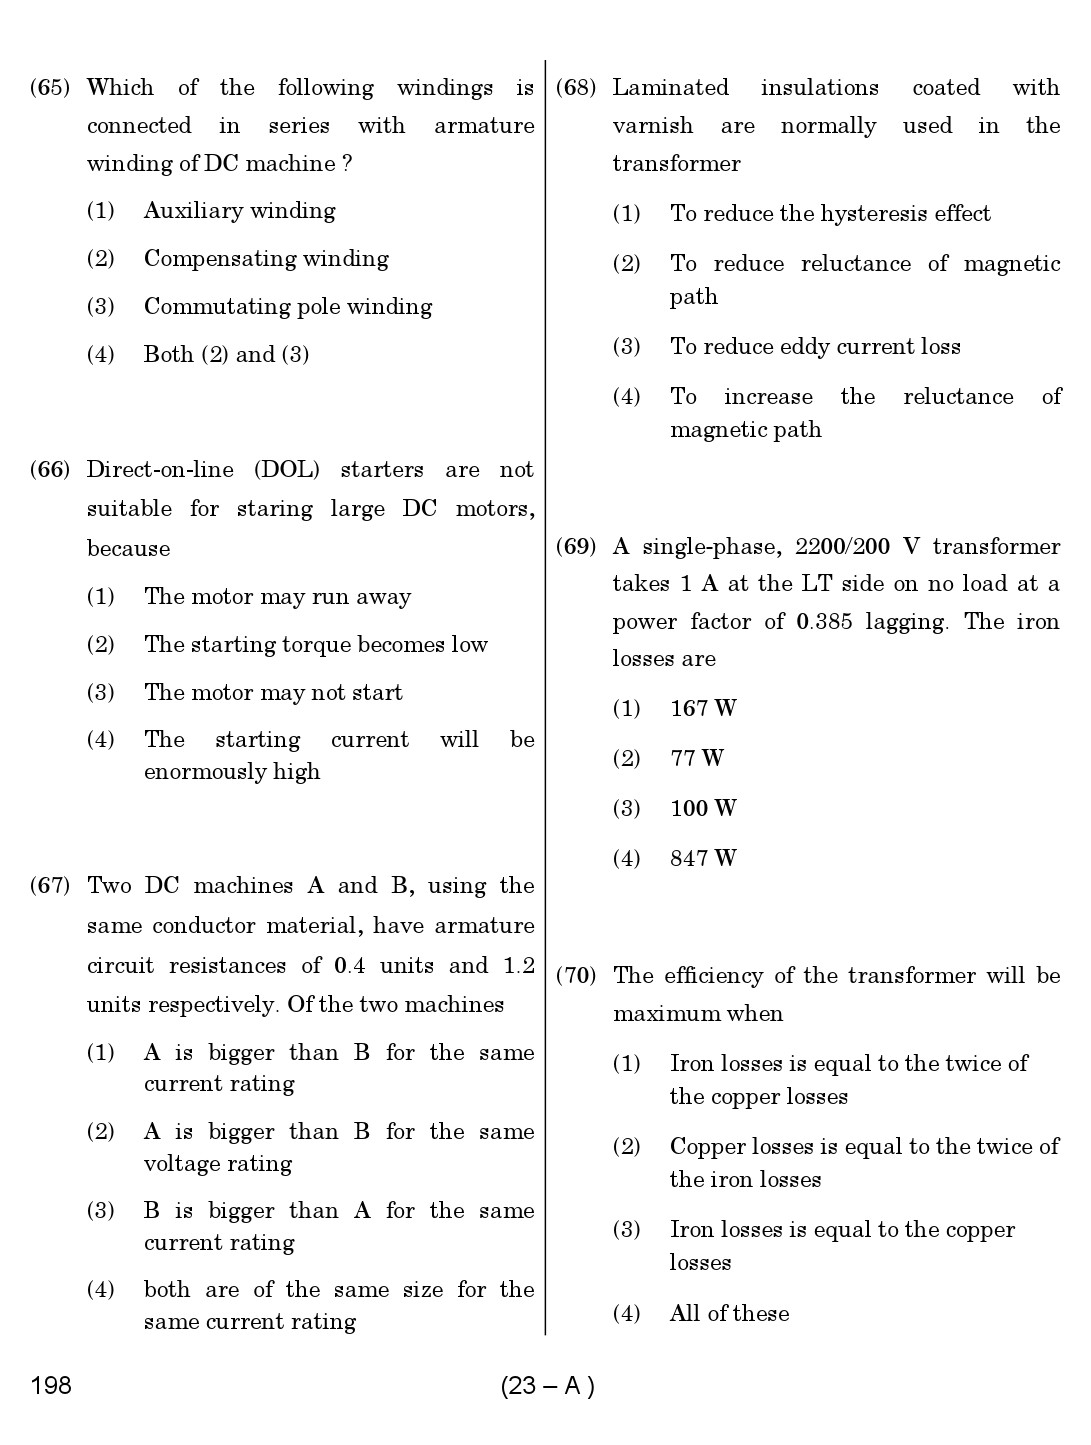 Karnataka PSC Junior Engineer Electrical Exam Sample Question Paper 23